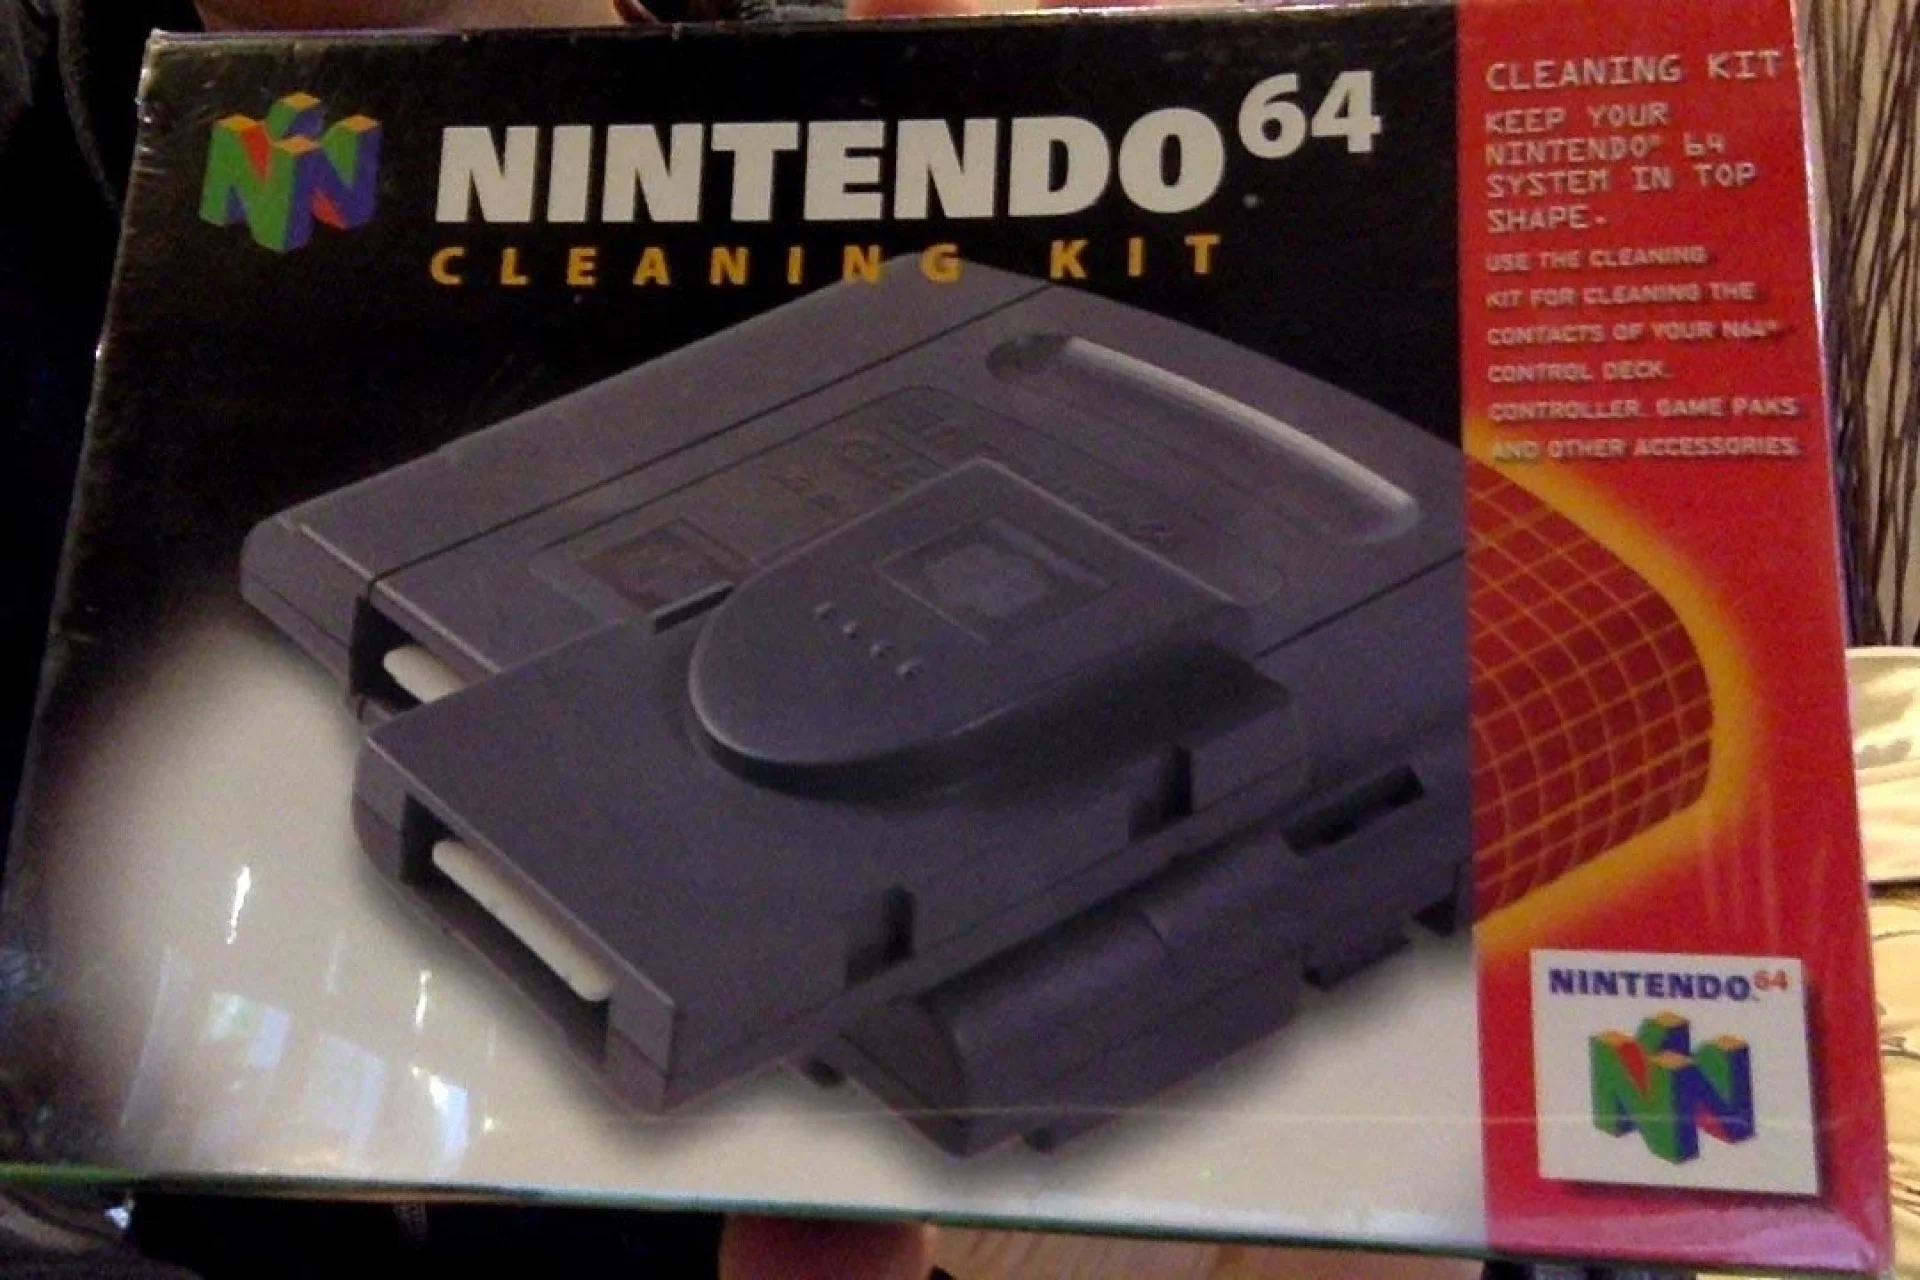  Nintendo 64 Cleaning Kit [EU]